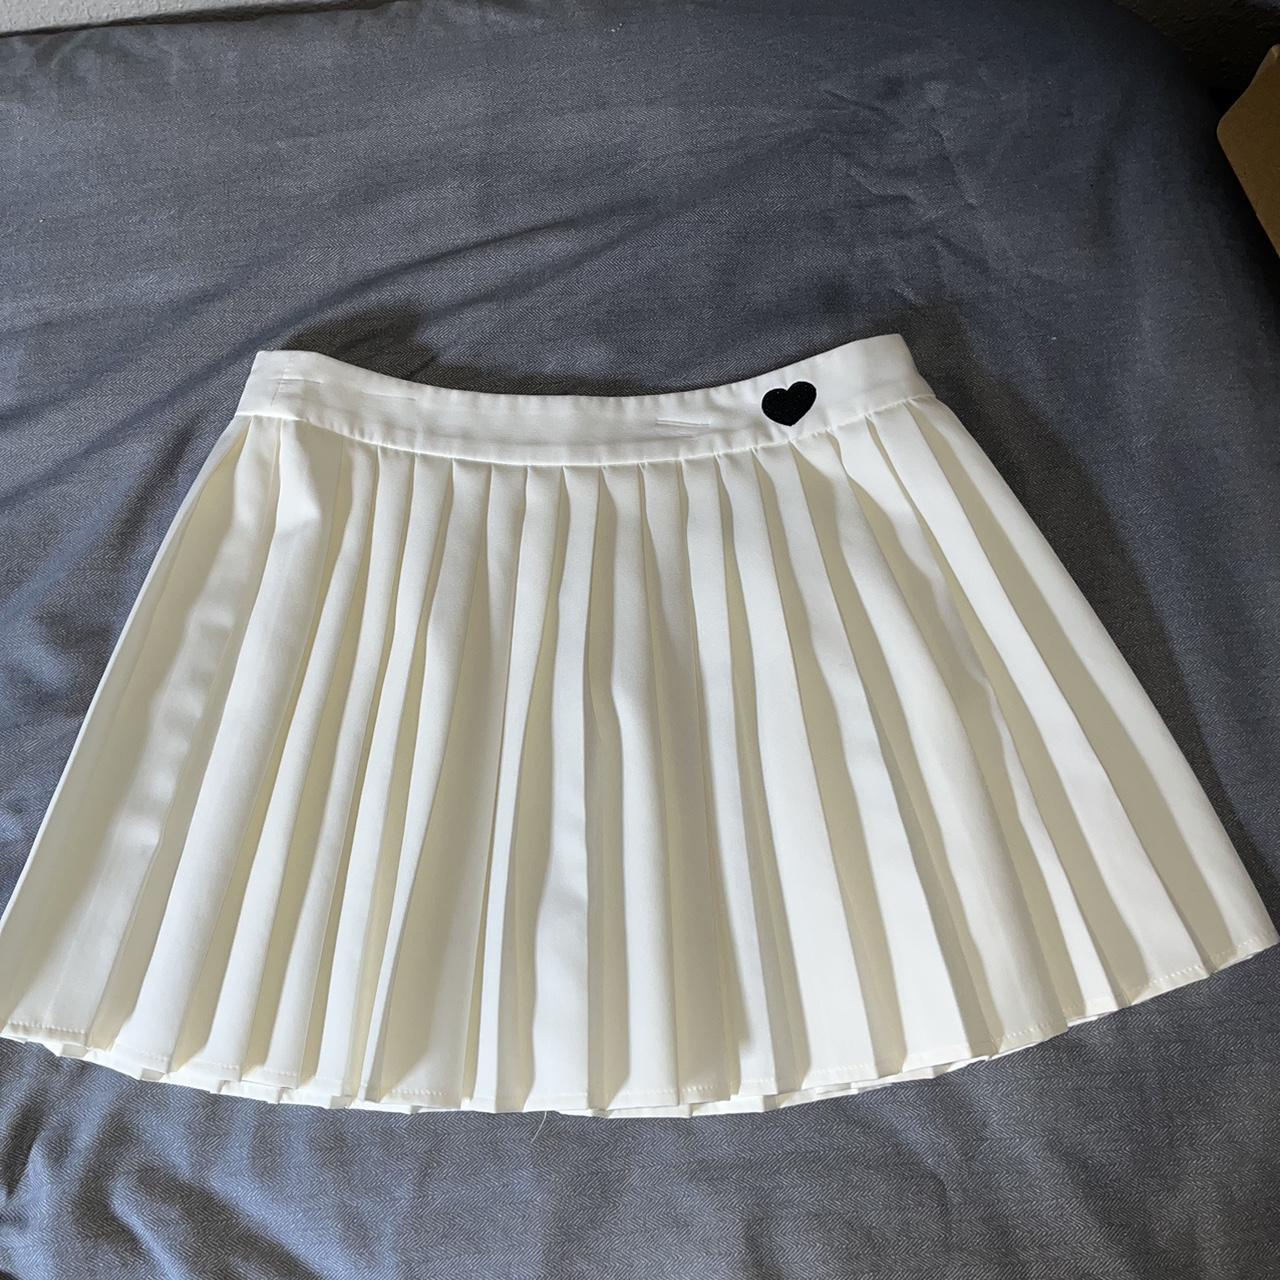 SHEIN Women's Skirt